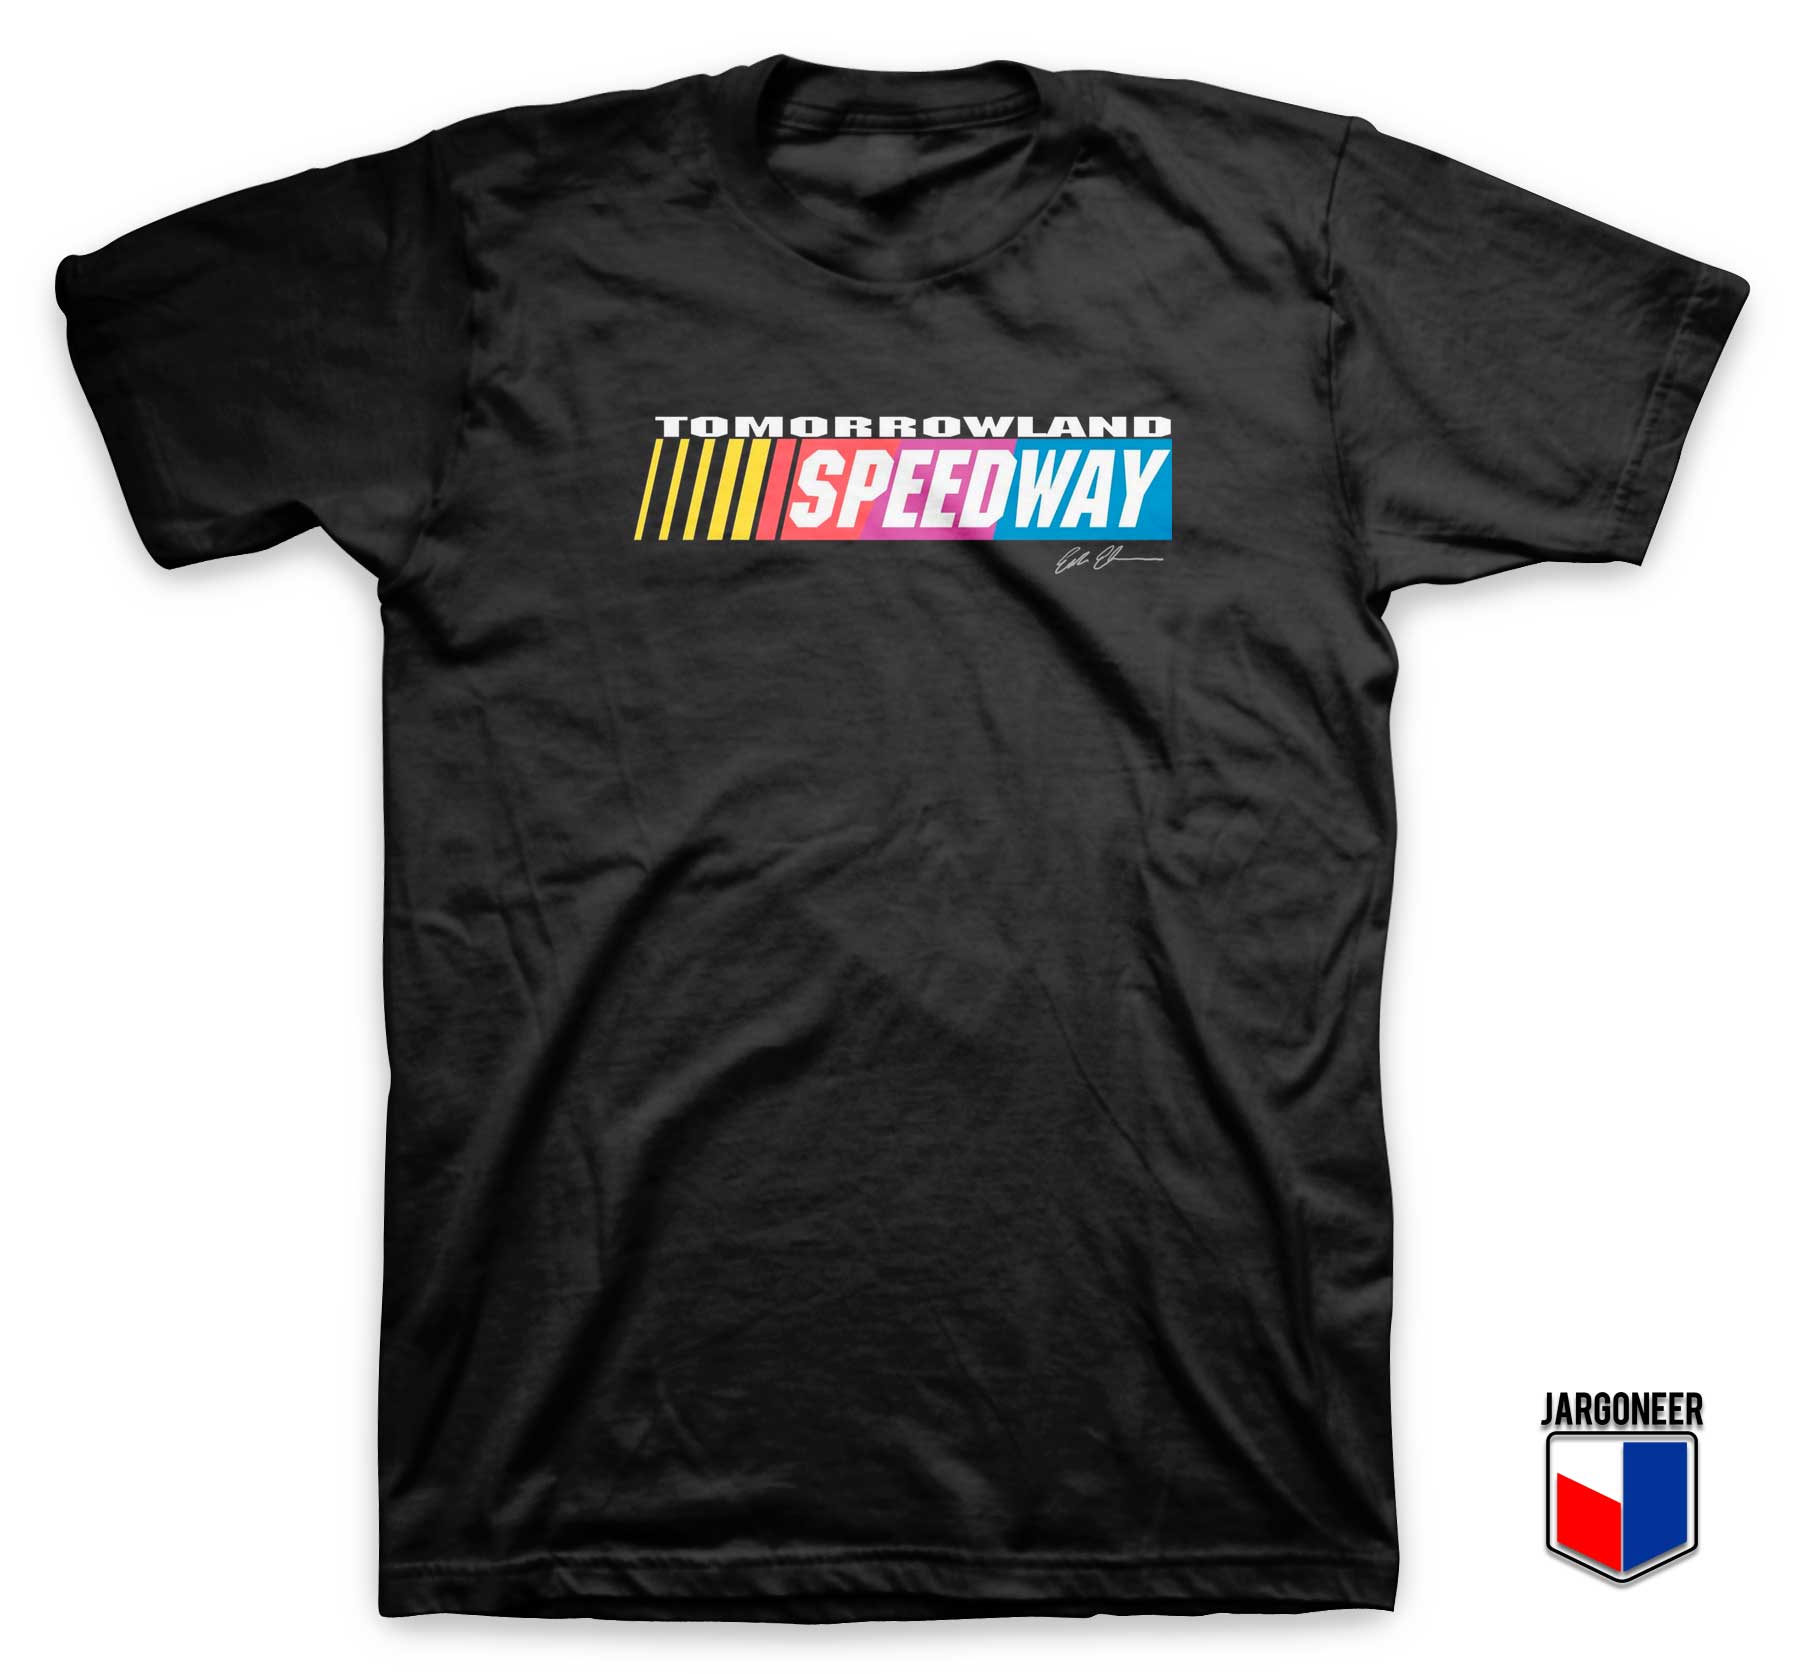 Tomorrowland Speedway T Shirt - Shop Unique Graphic Cool Shirt Designs